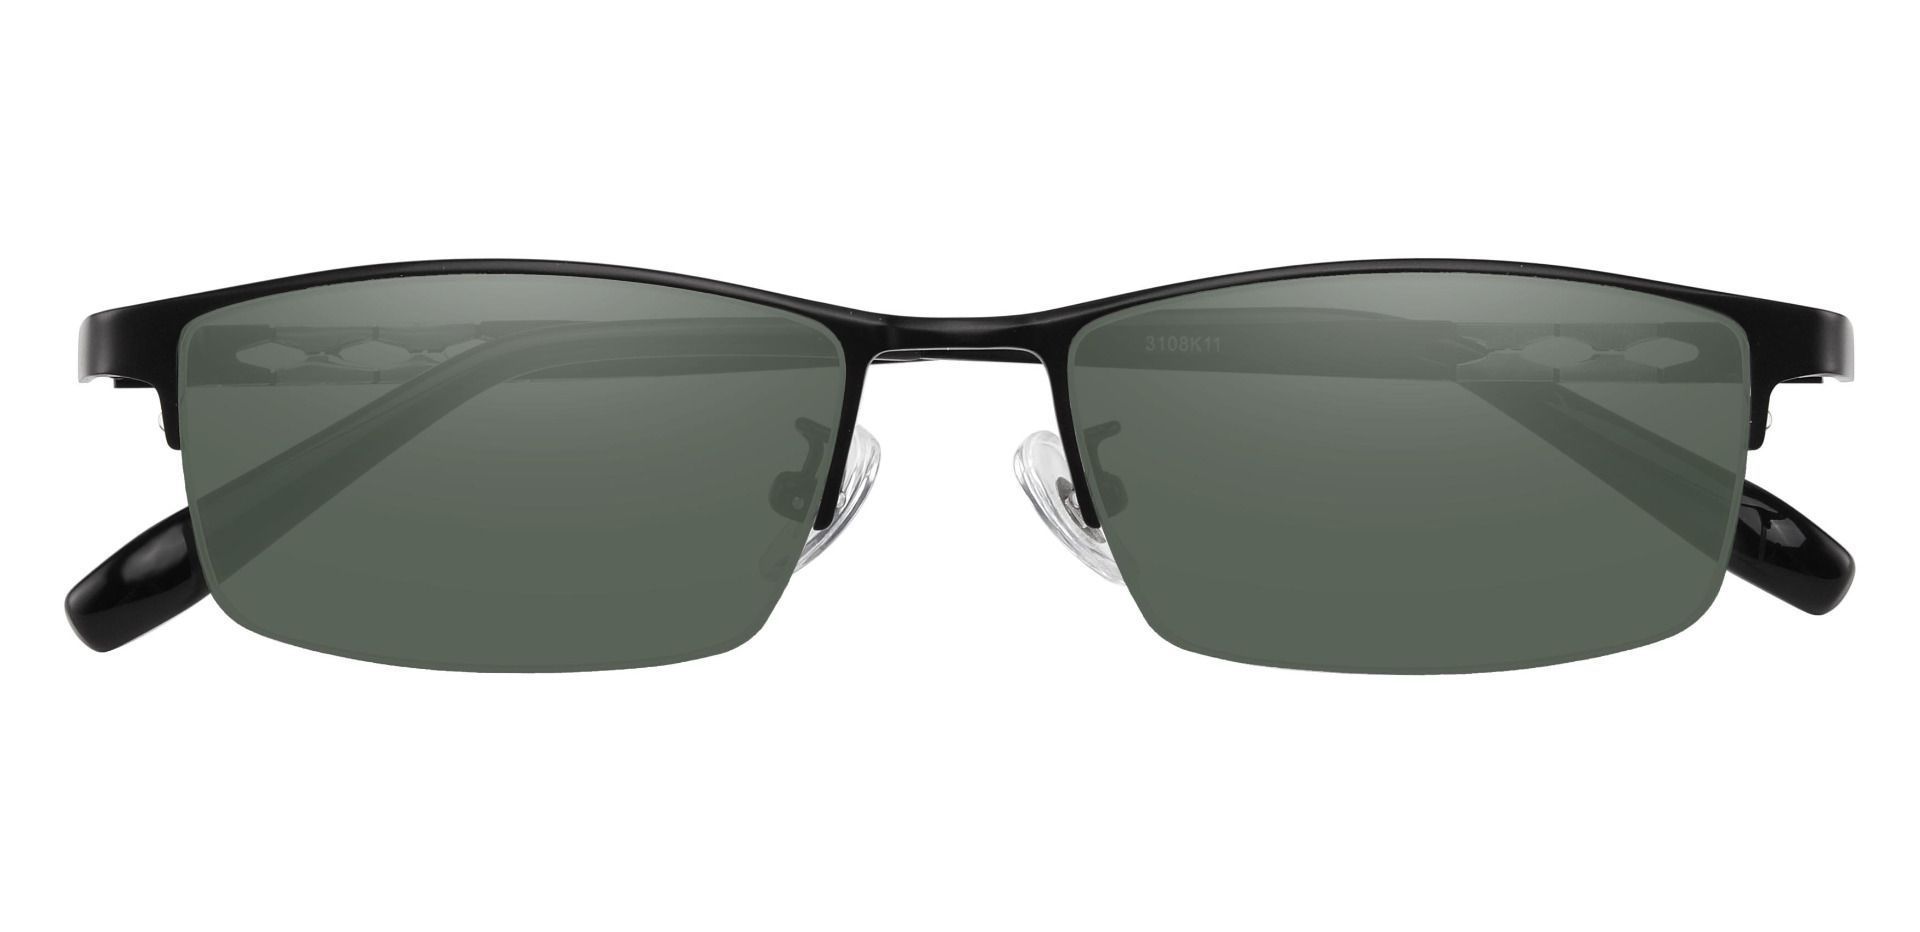 Burlington Rectangle Non-Rx Sunglasses - Black Frame With Green Lenses